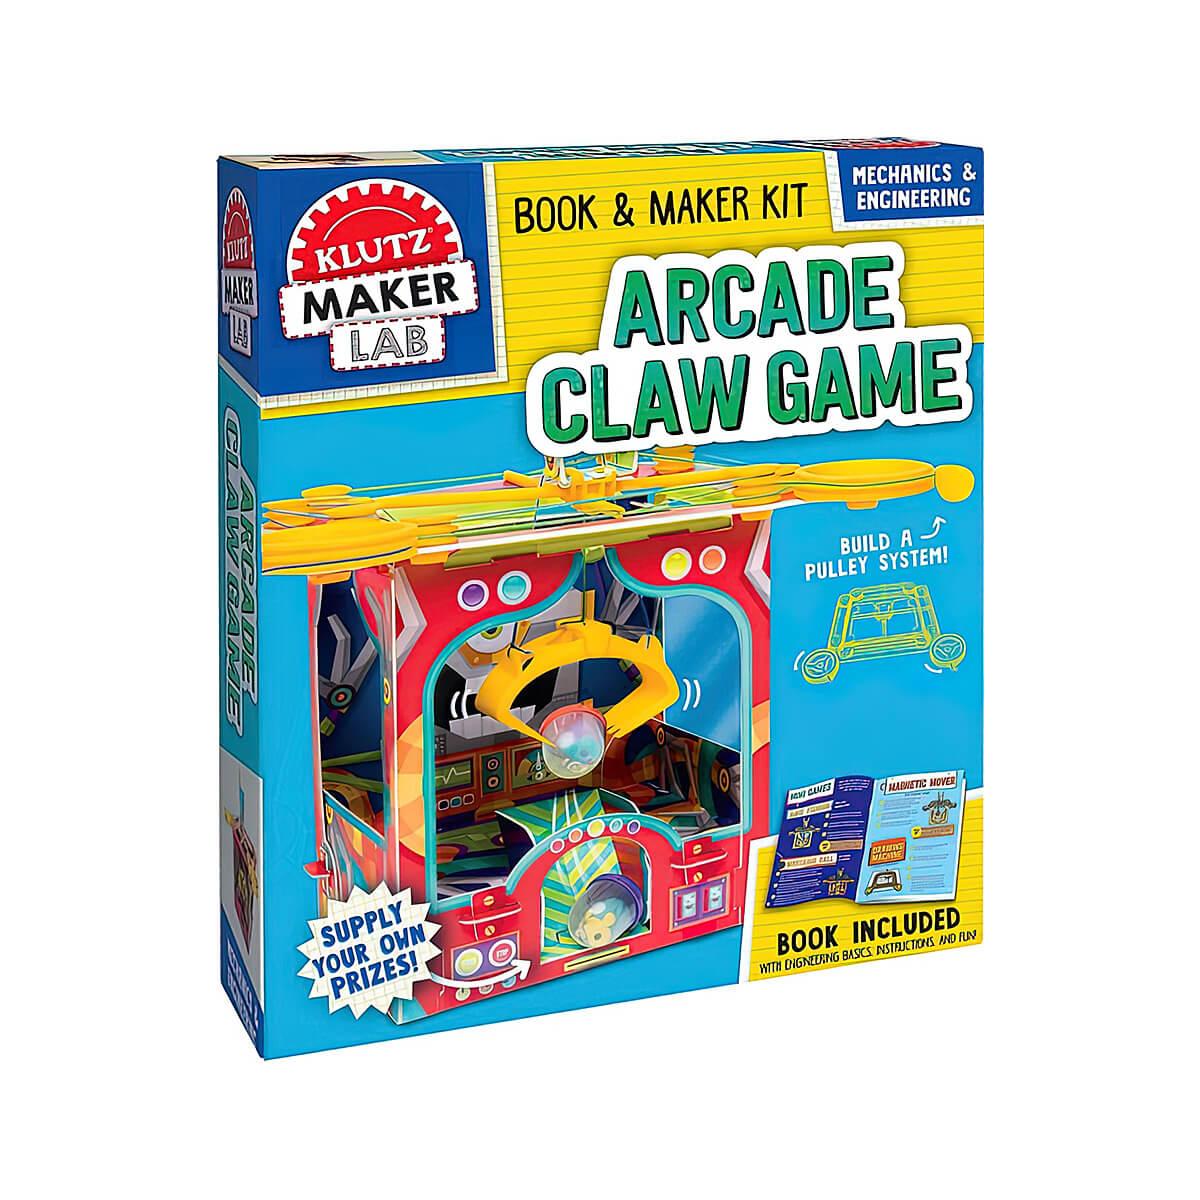  Arcade Claw Game